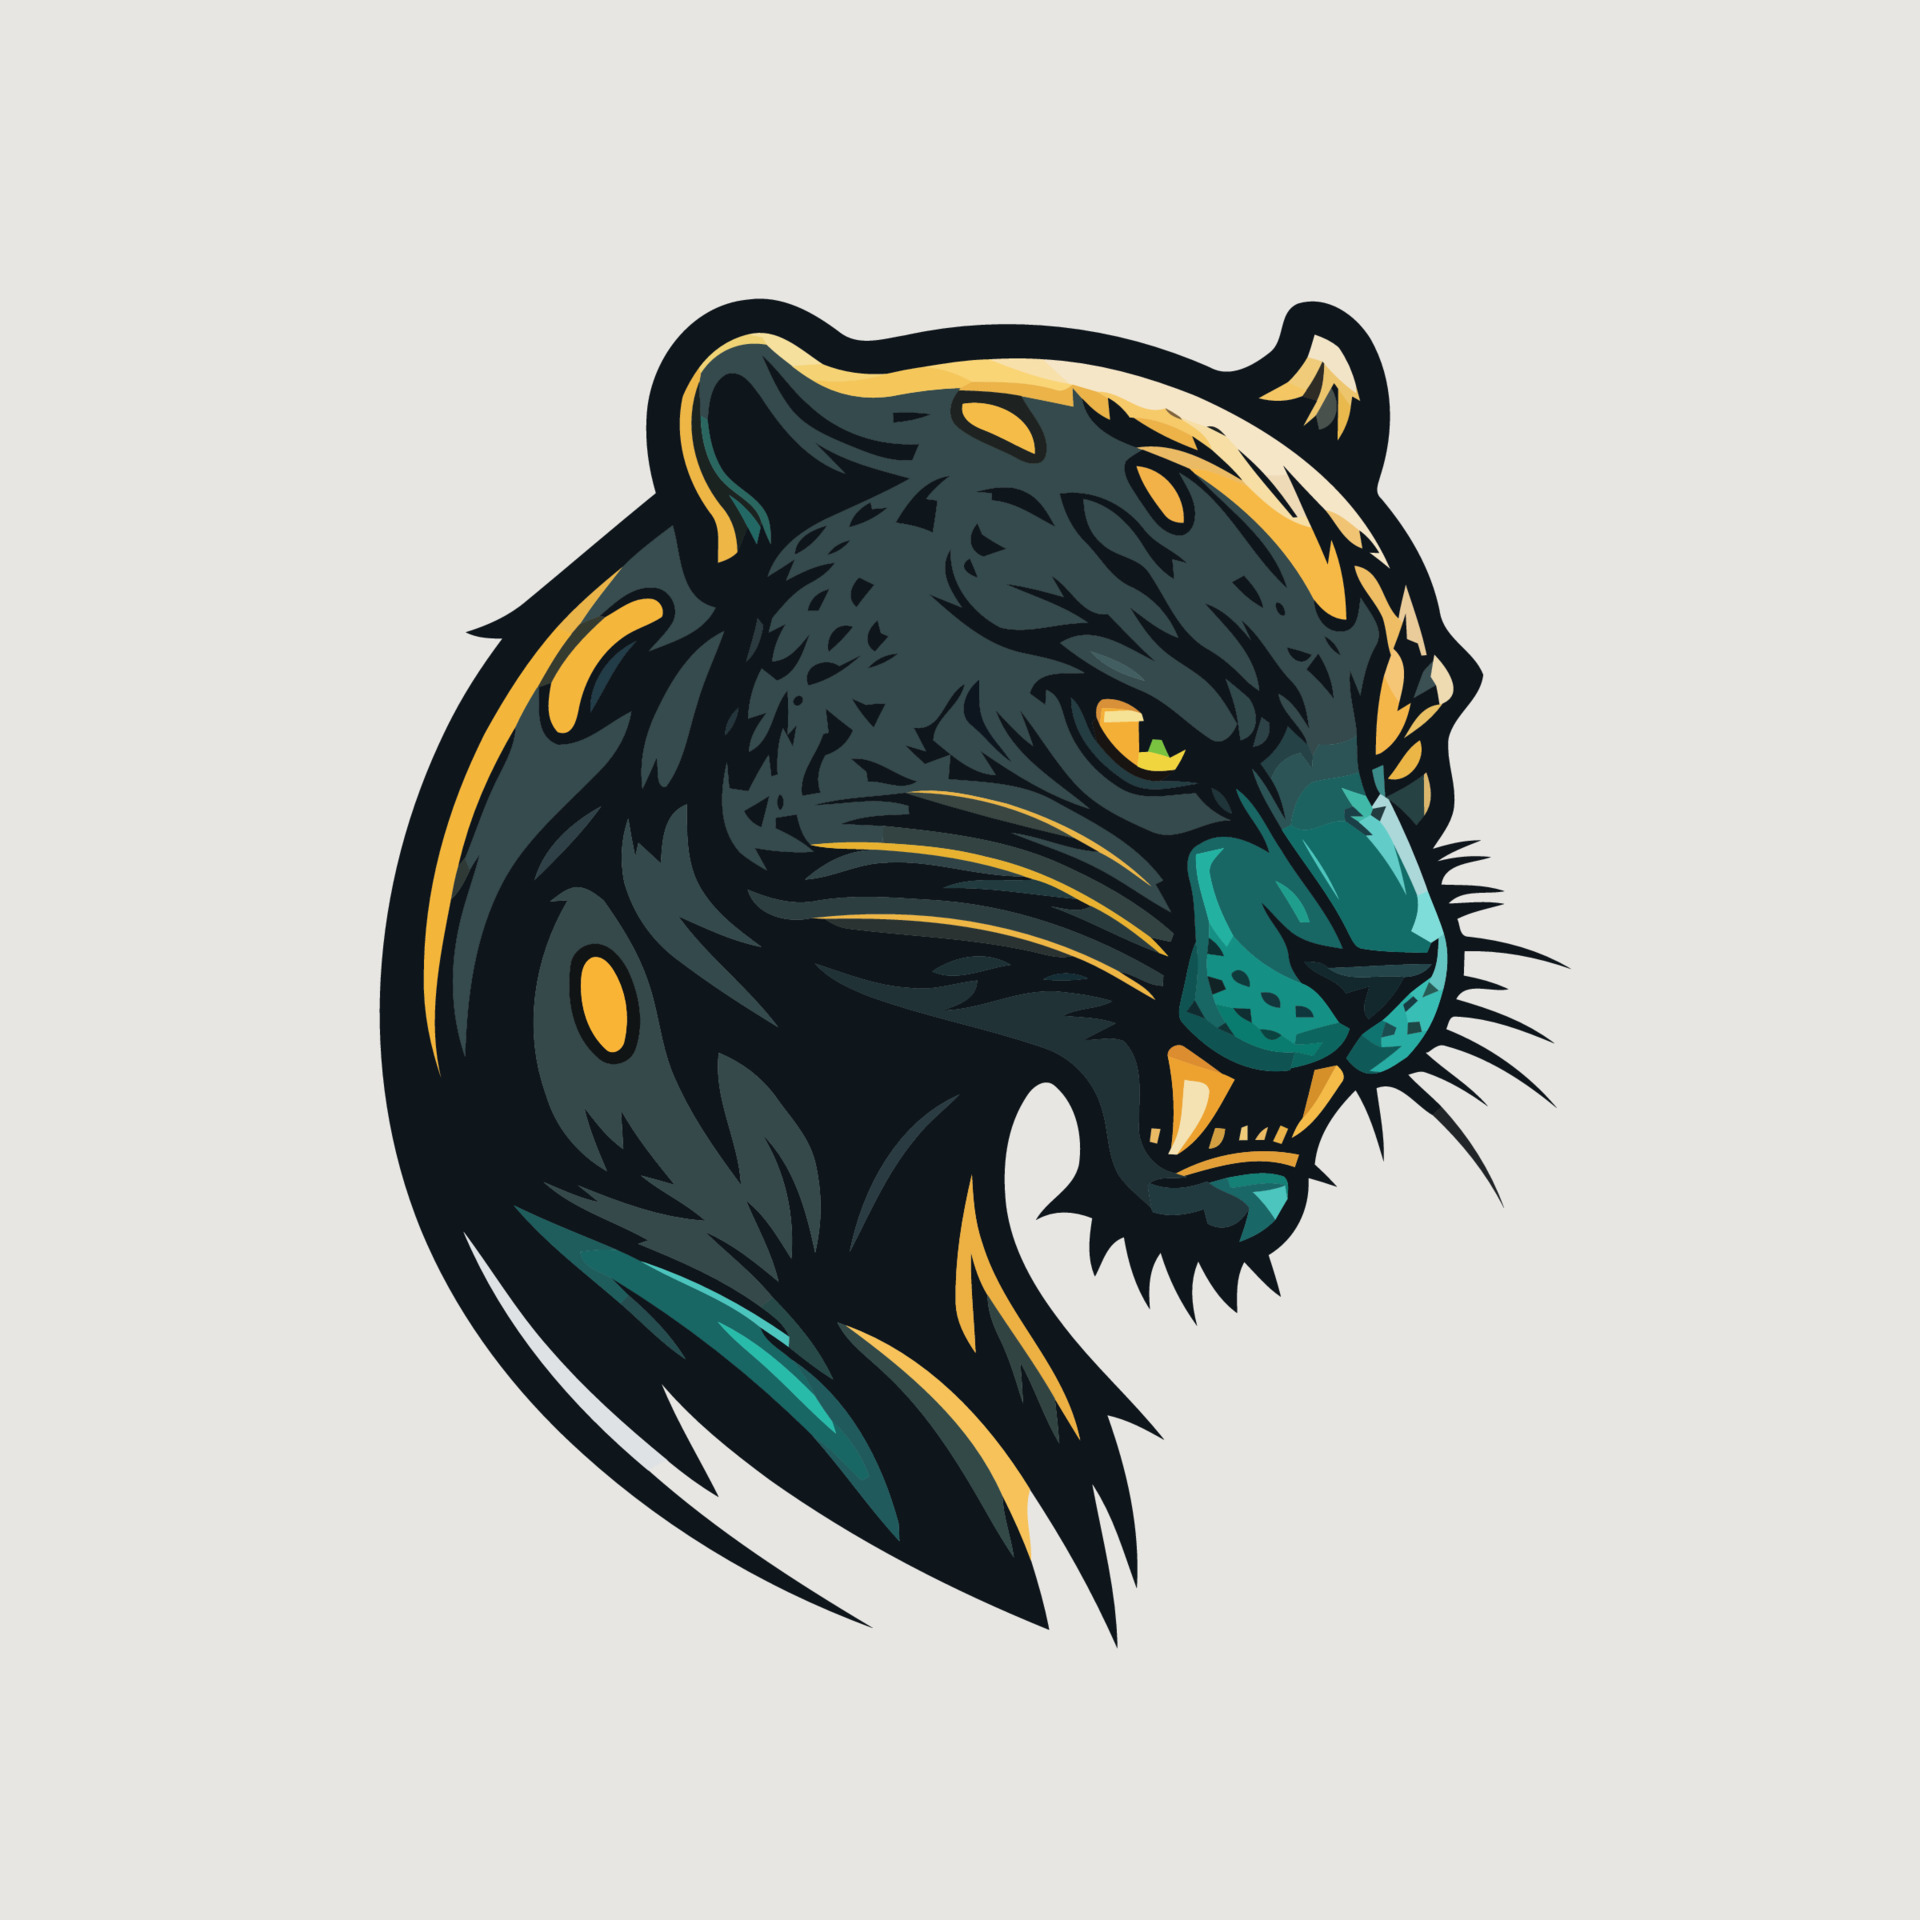 Black Panther jaguar face logo mascot icon wild animal character vector logo  16088506 Vector Art at Vecteezy